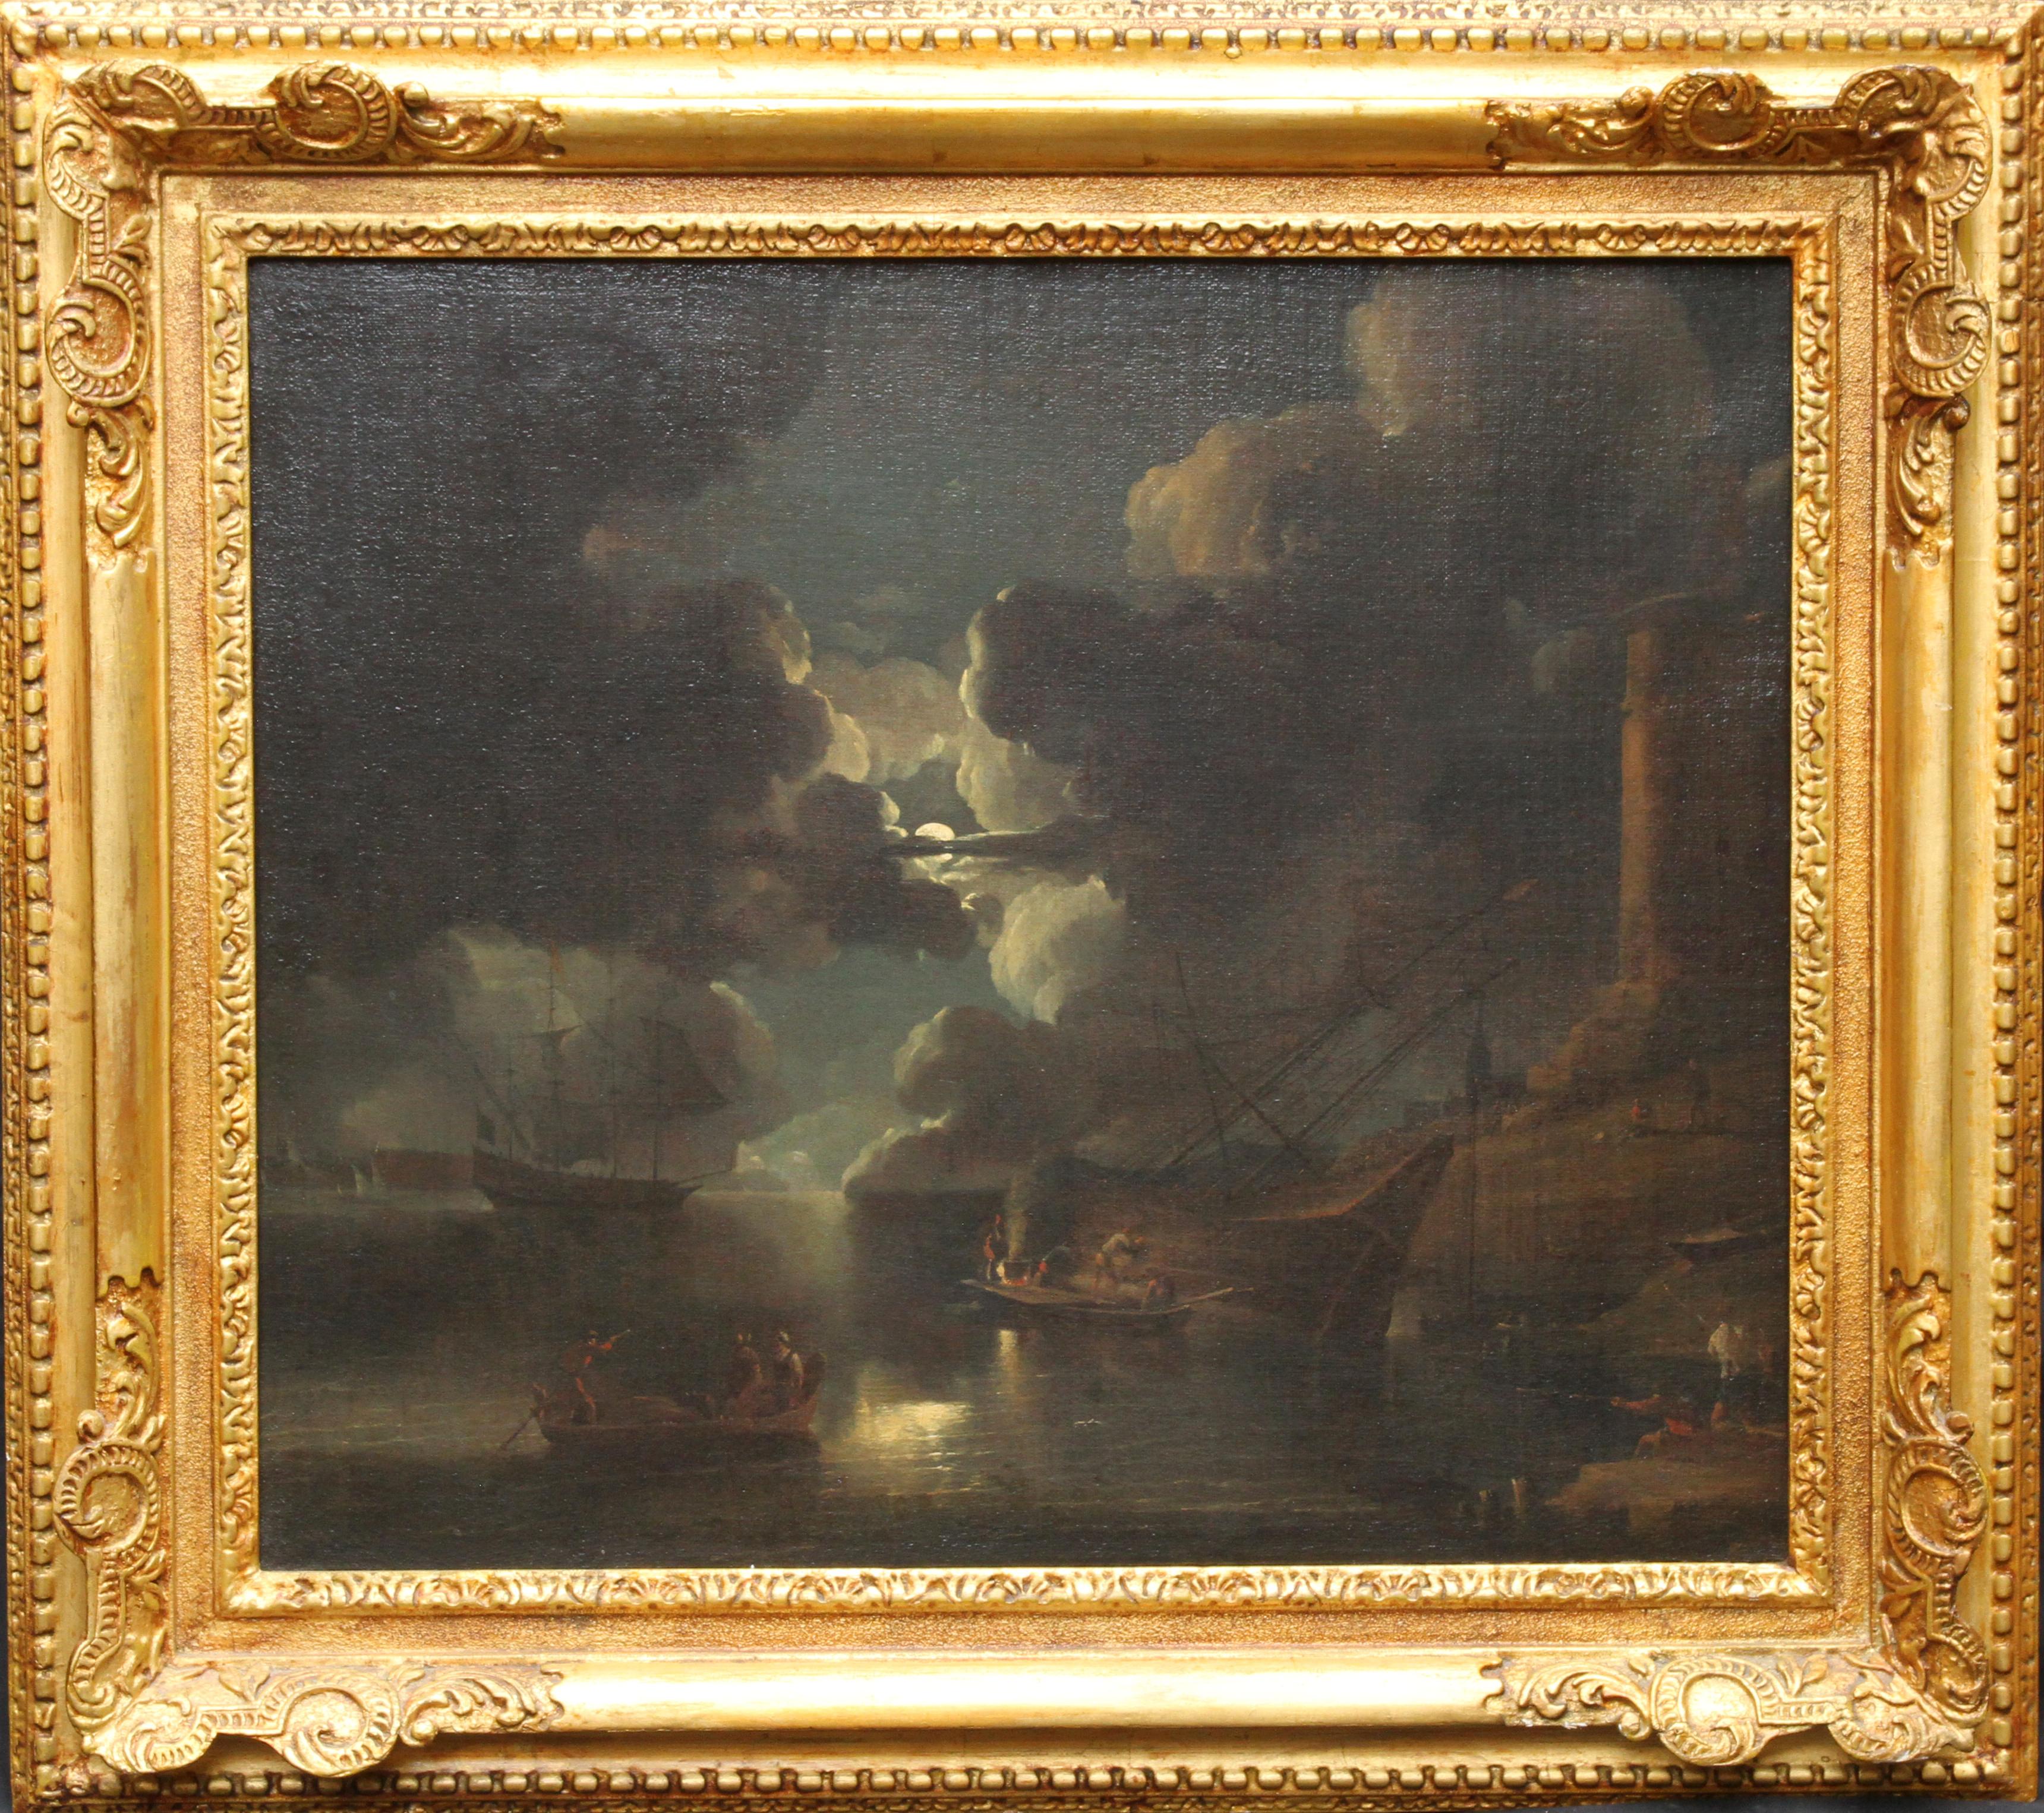 Coastal Maritime Nocturne - Dutch Golden Age art 17thC marine oil painting 4